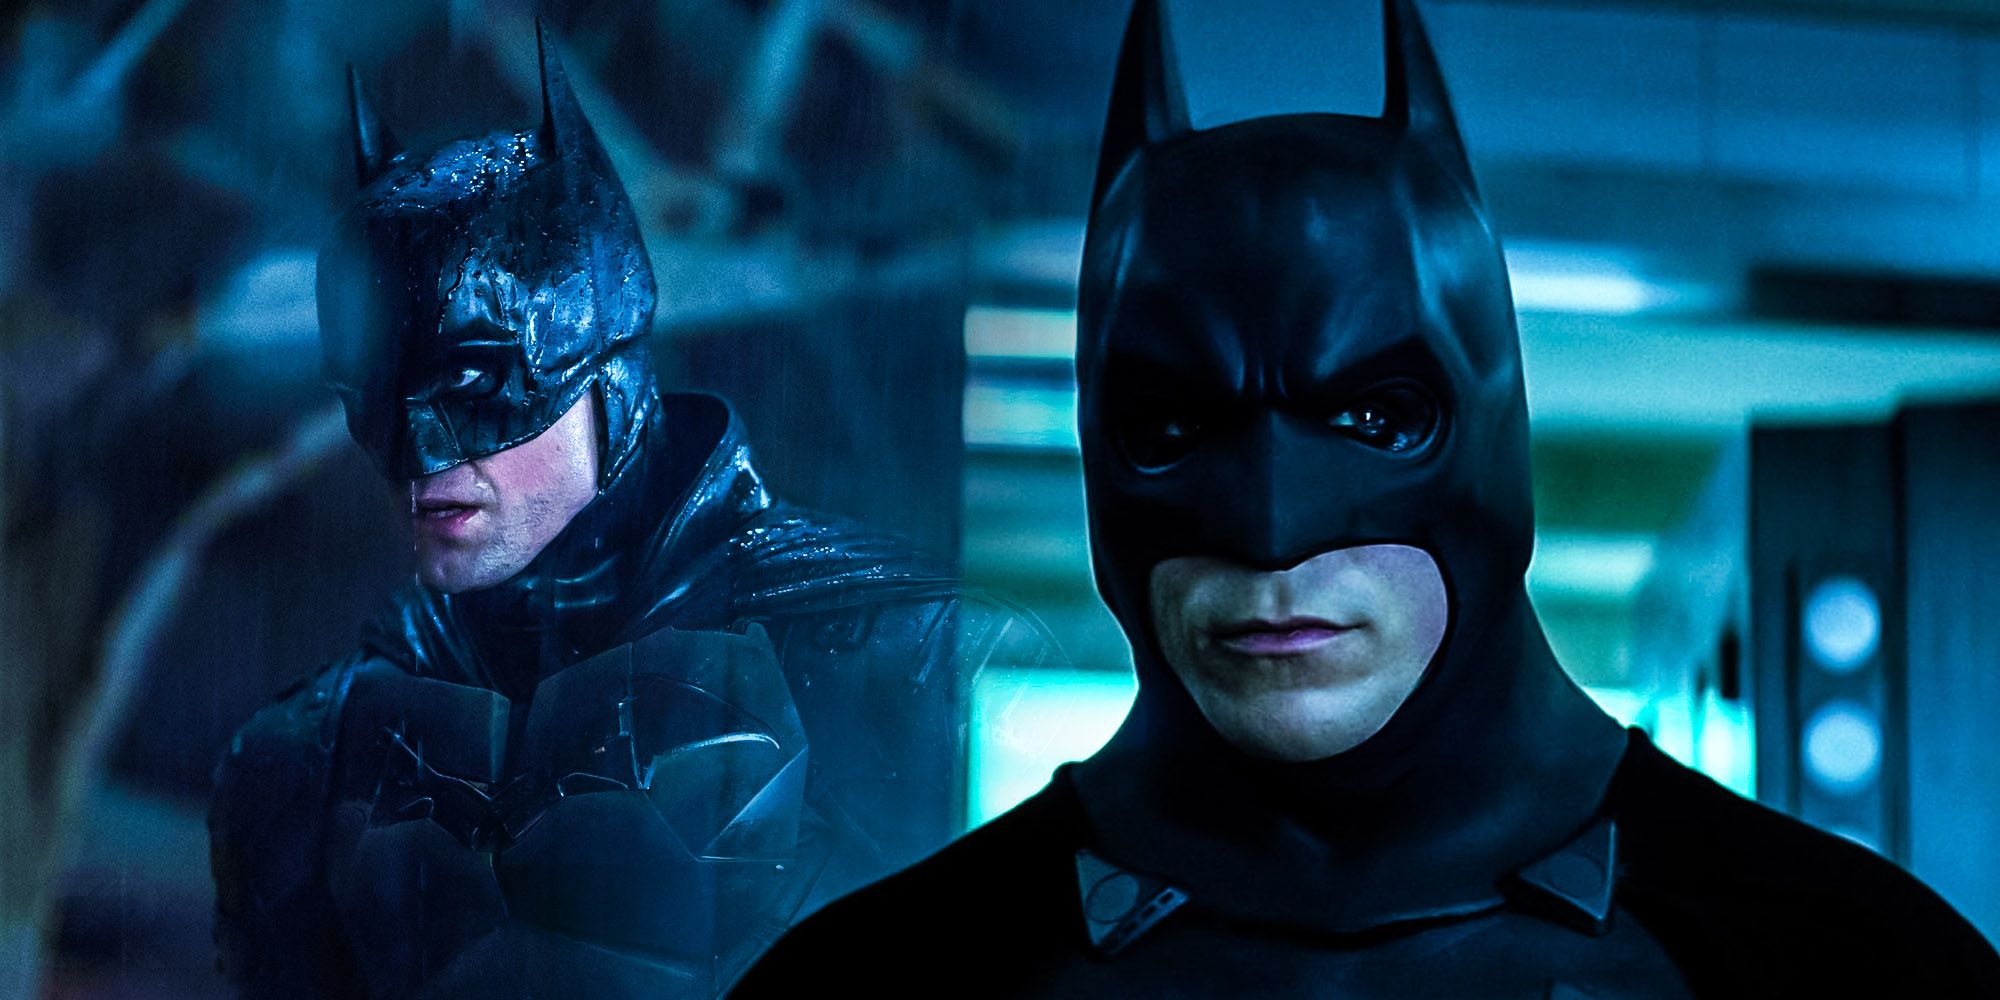 Robert Pattinson vs Christian Bale: Which Batman Had More Realistic Gear?